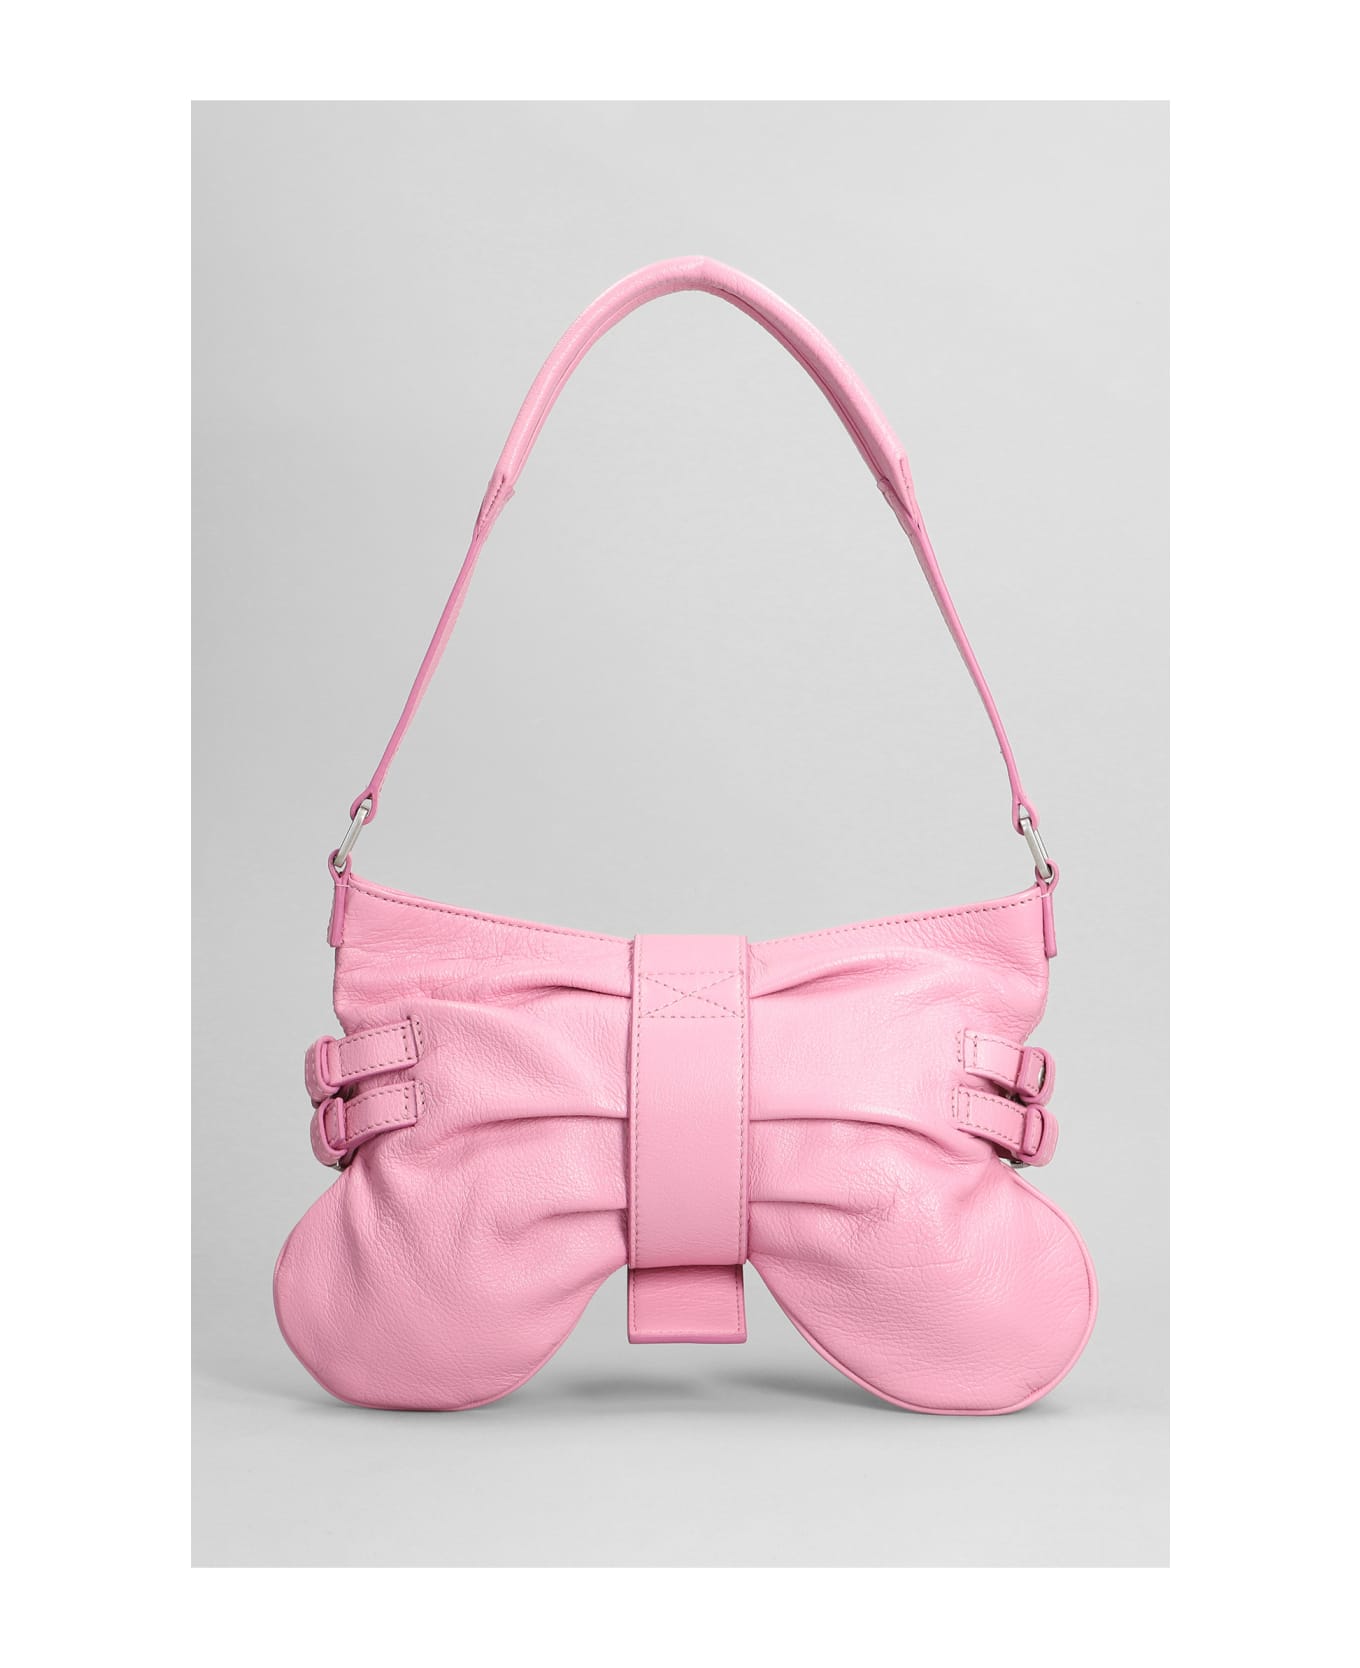 Blumarine Hand Bag In Rose-pink Leather - Dalia